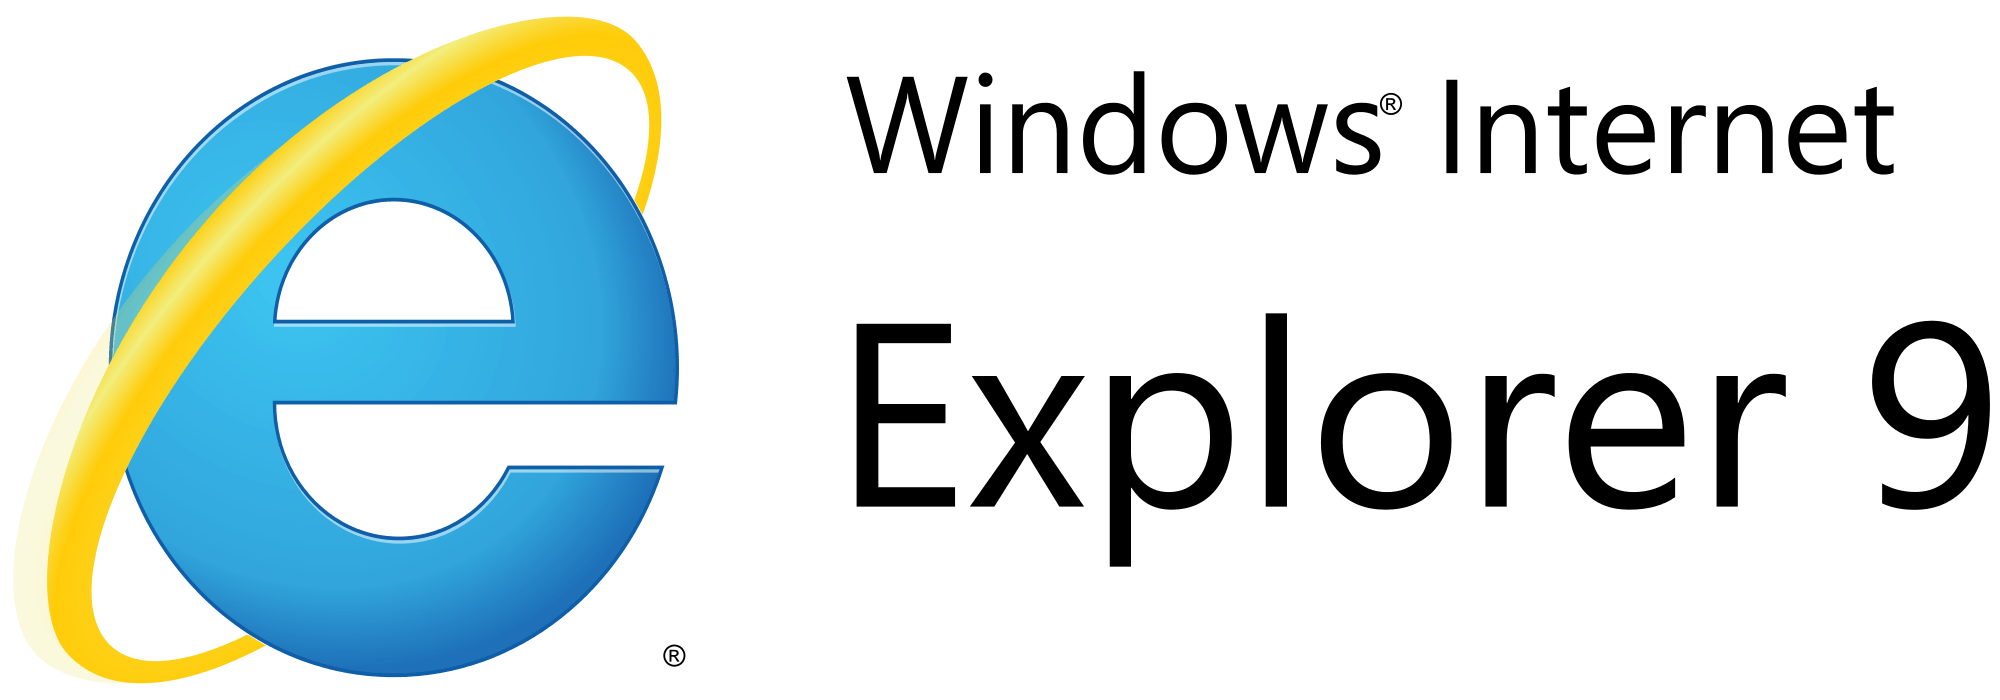 Windows 9 Logo - File:Windows Internet Explorer 9-Logo.svg - Wikimedia Commons